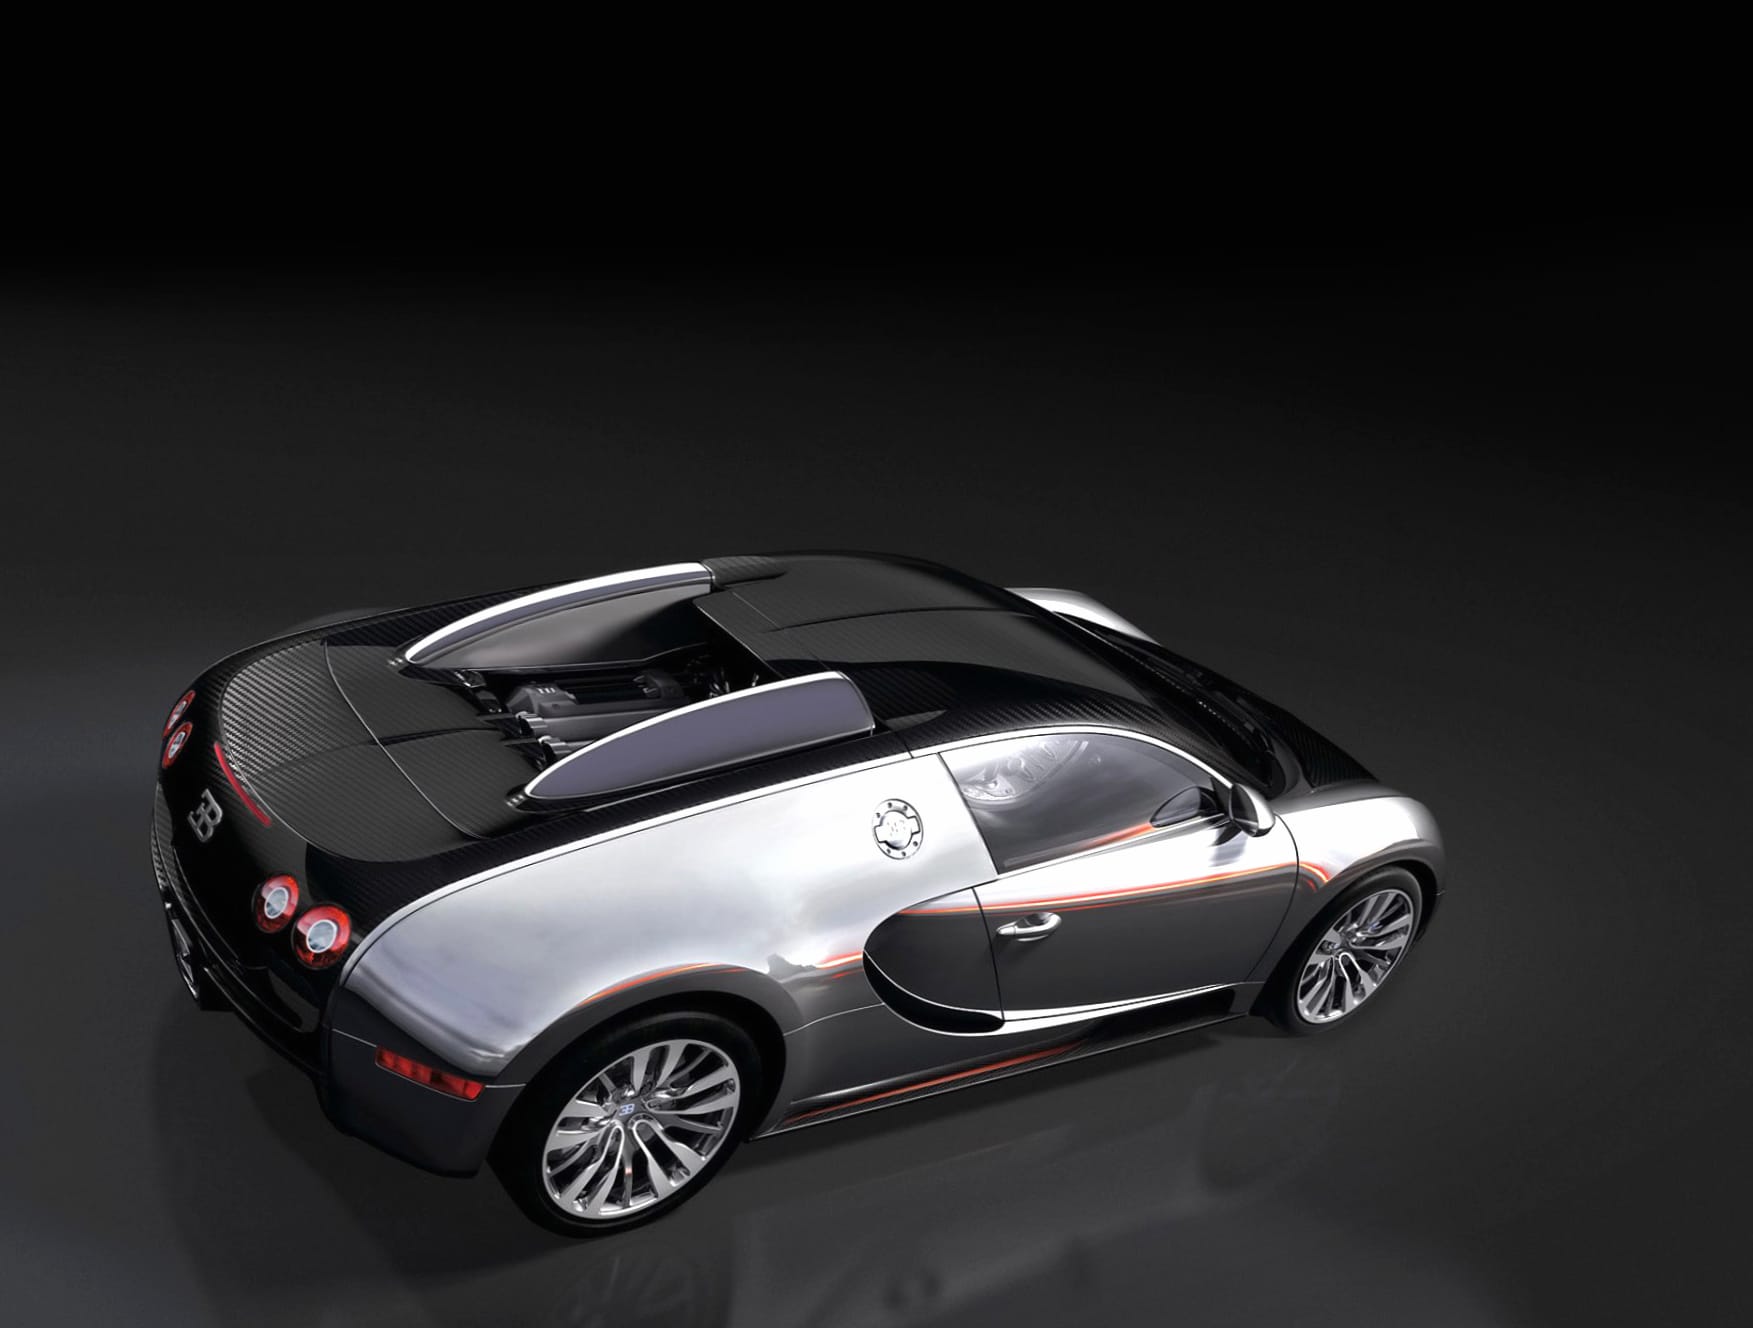 Bugatti Veyron 16-4 Pur Sang at 1024 x 1024 iPad size wallpapers HD quality